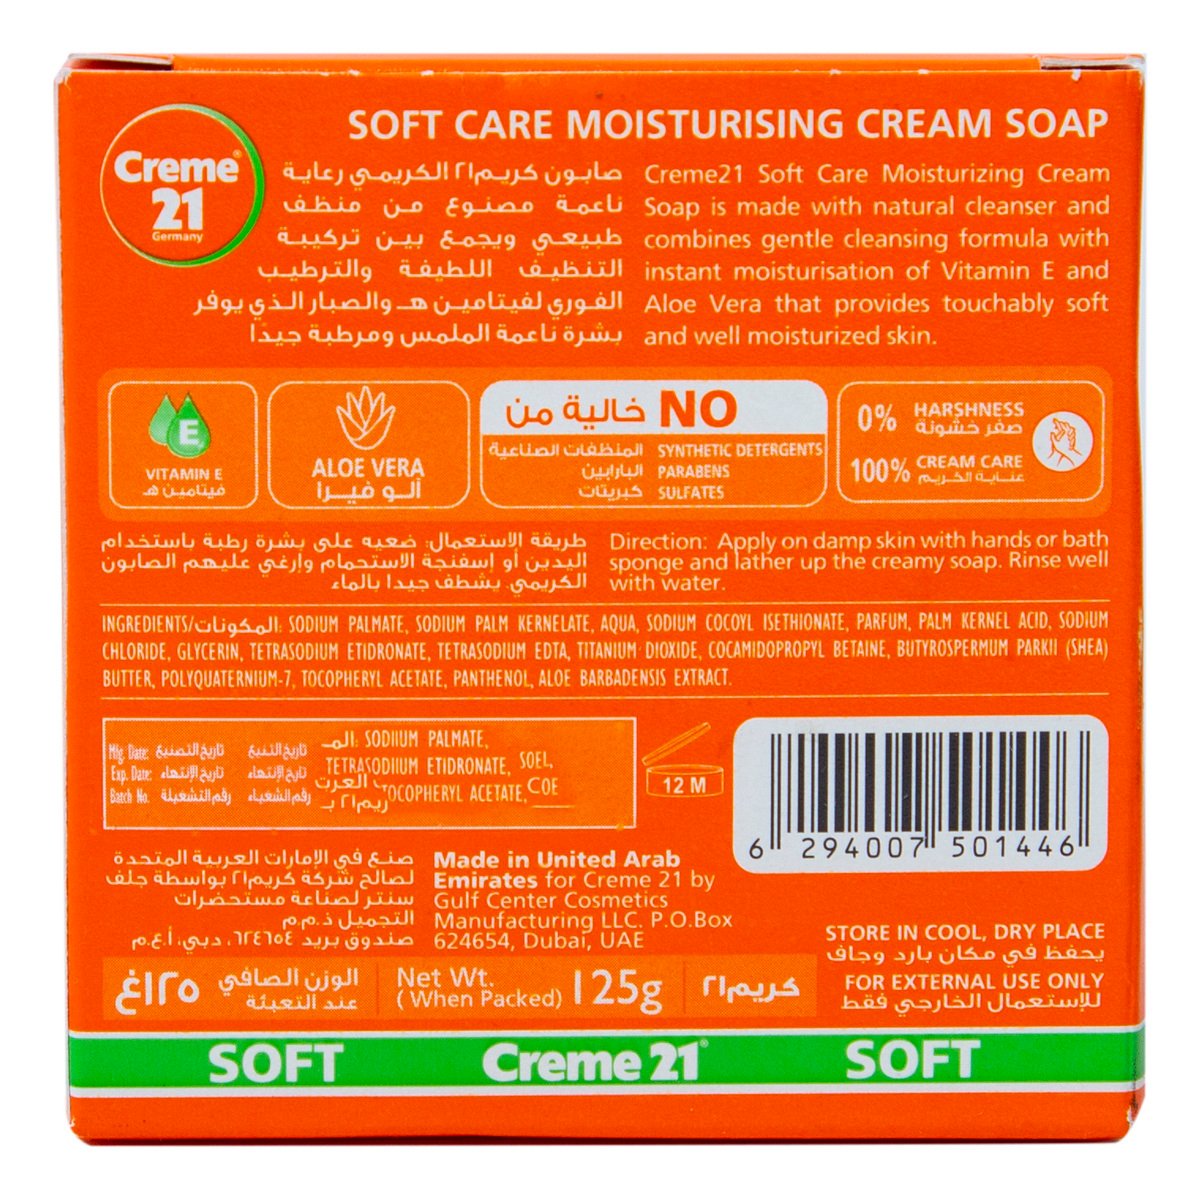 Creme 21 Soft Care Moisturizing Cream Soap 125 g